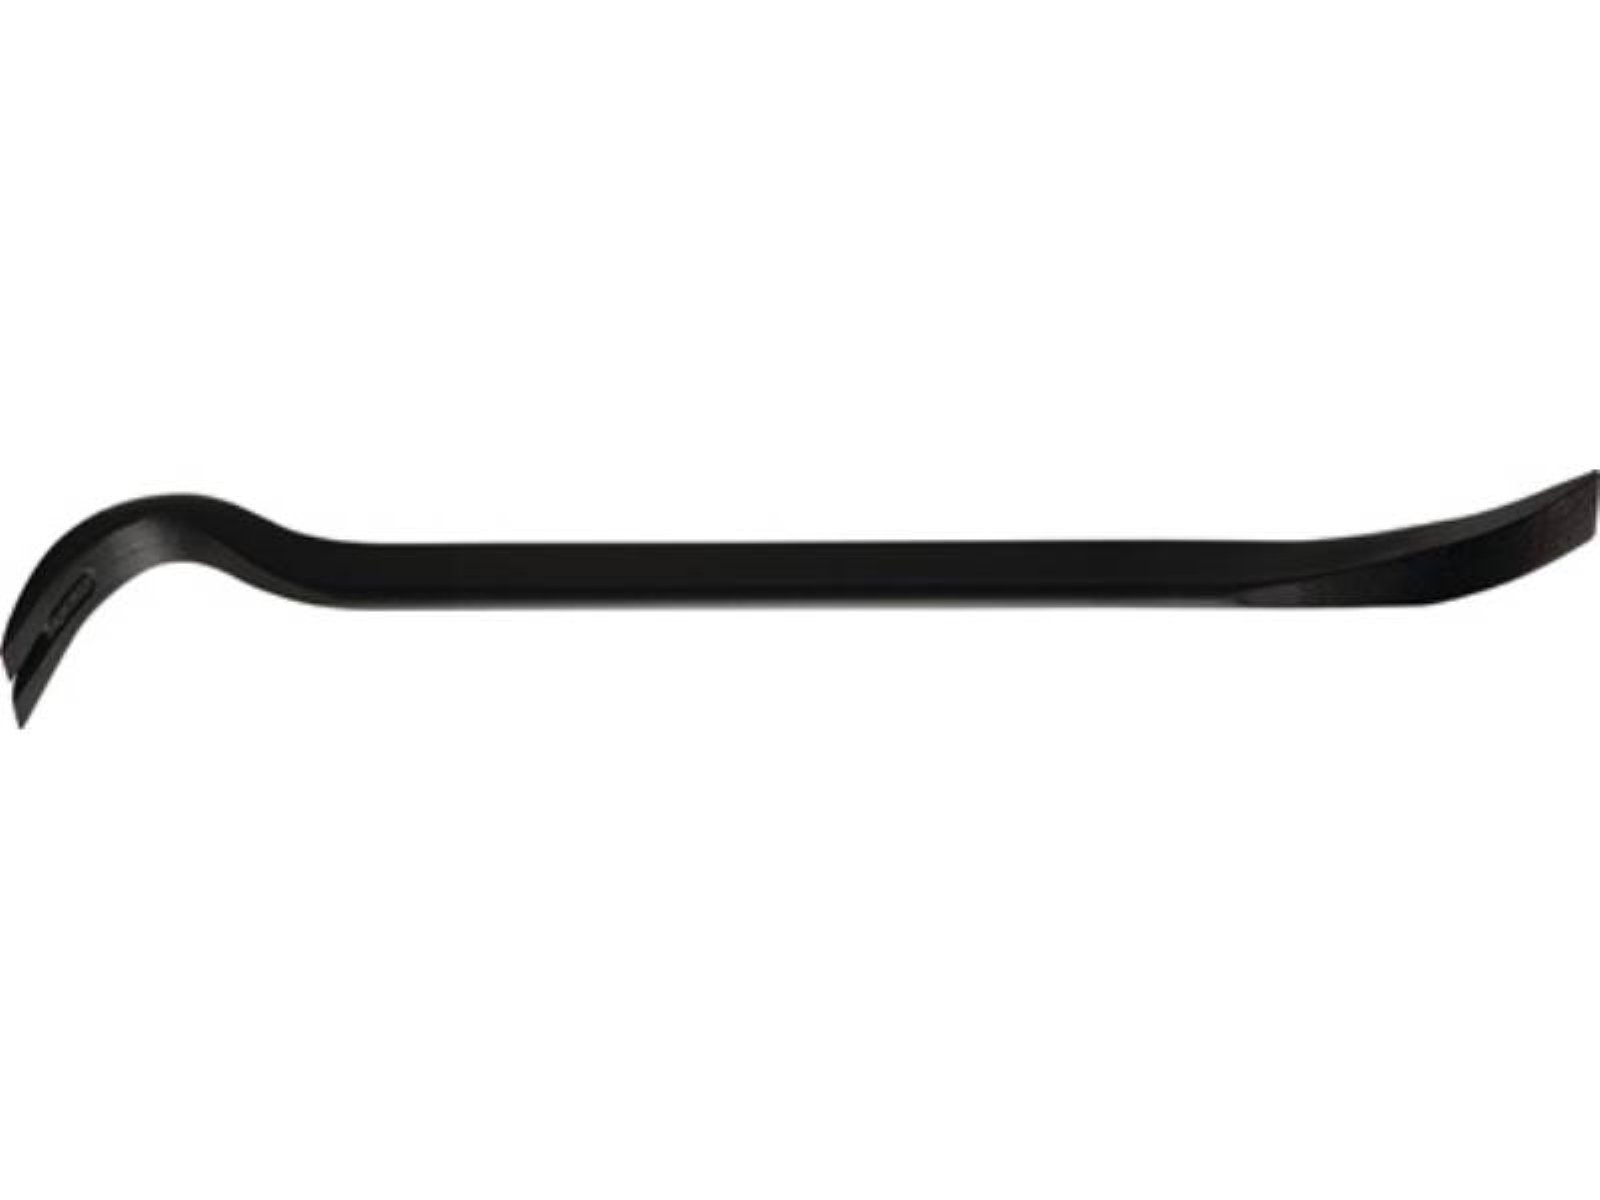 ovaler Nageleisen Power ovale Gesamtlänge Nageleisen Korpus Form Peddinghaus mi 1200 mm, Bar